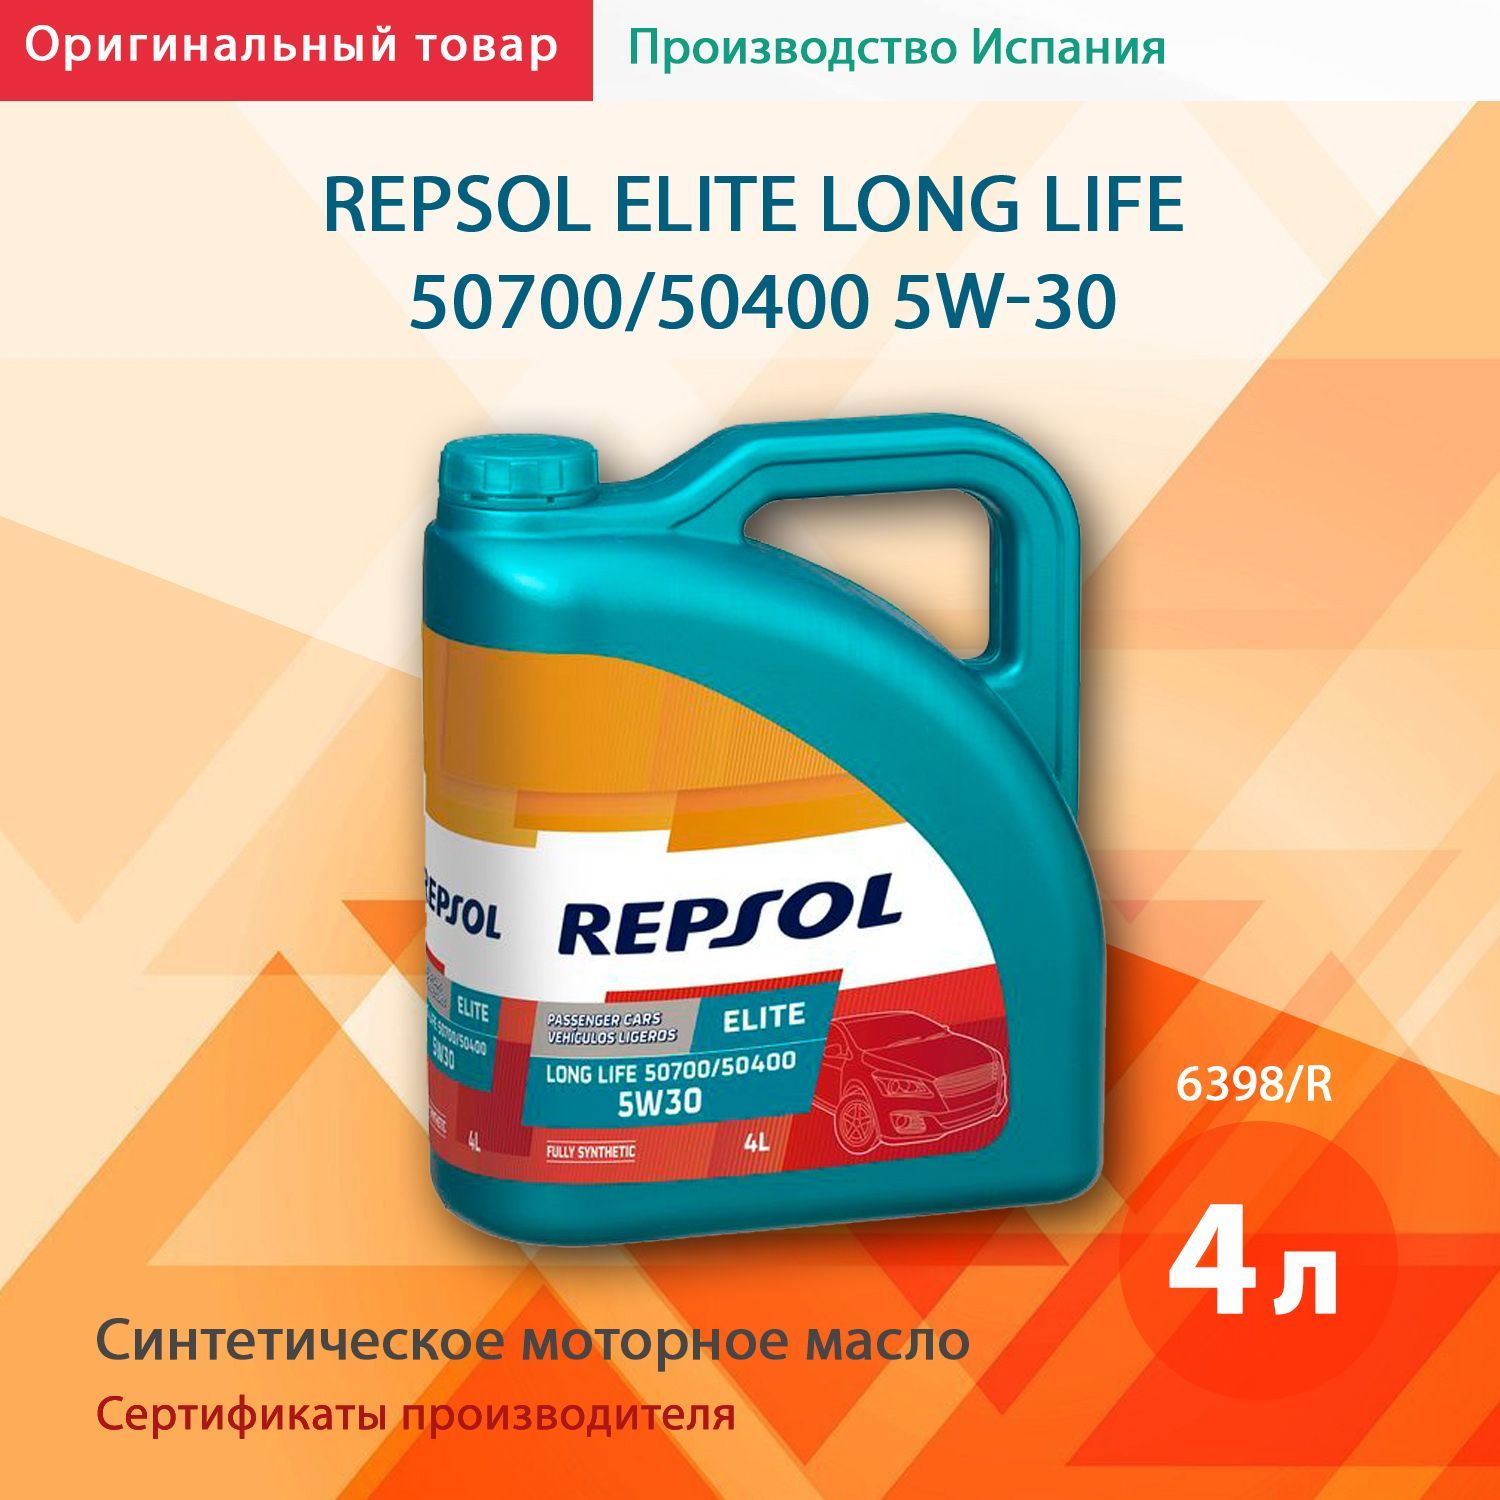 Масло repsol elite long life 5w30. Repsol 5w30. Масло Испания моторное Repsol 5w30. Repsol 5w40 4+1 артикул.